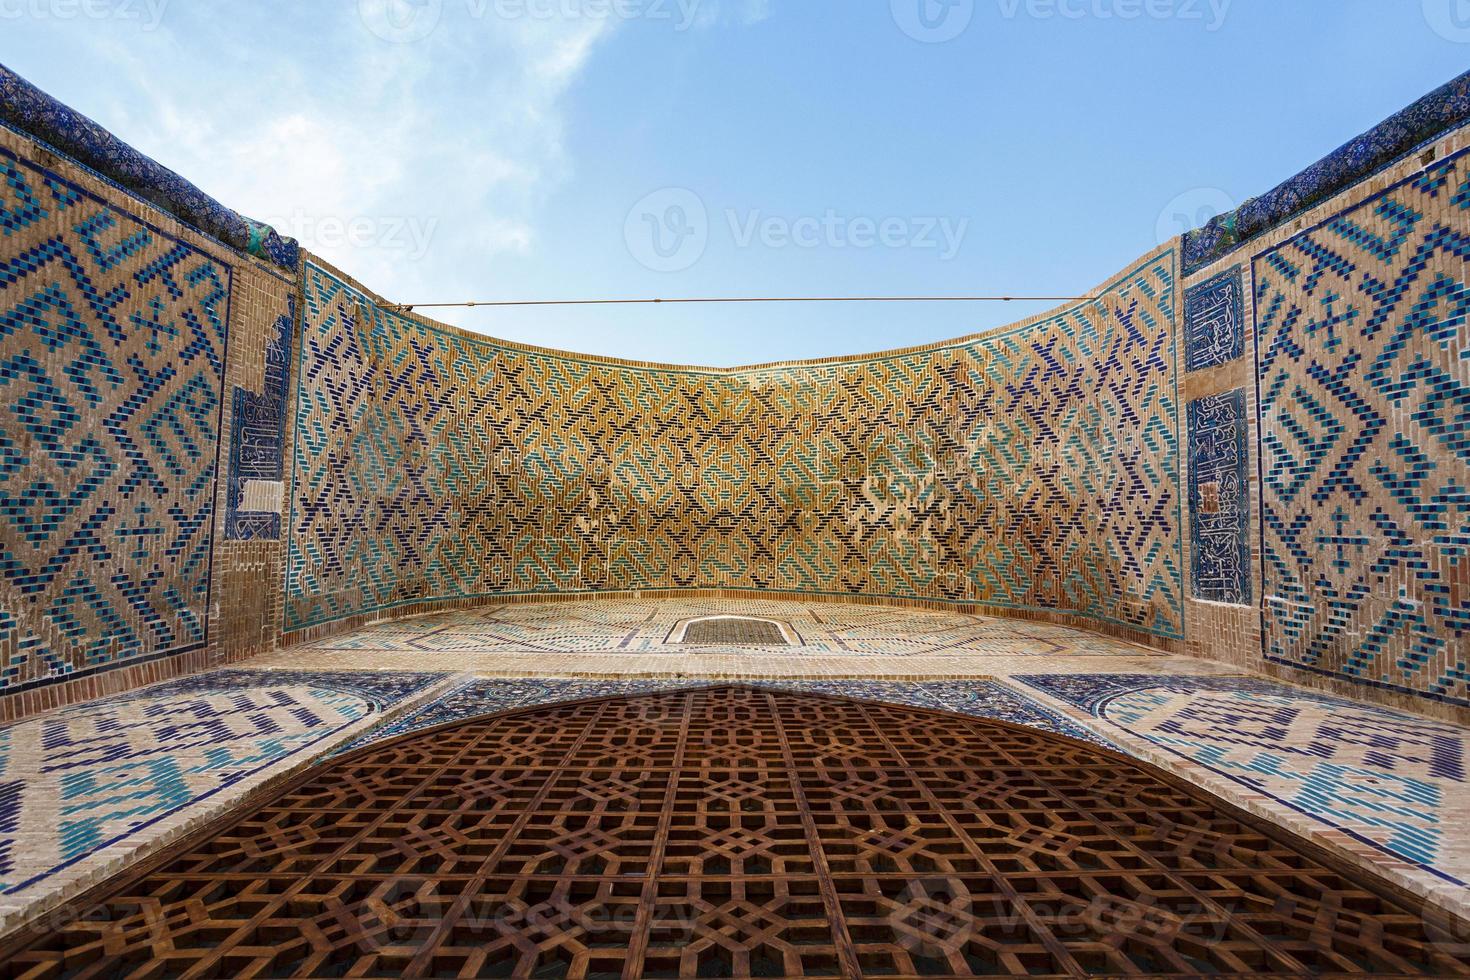 exterior de la mezquita kok gumbaz en shahrisabz, qashqadaryo, uzbekistán, asia central foto